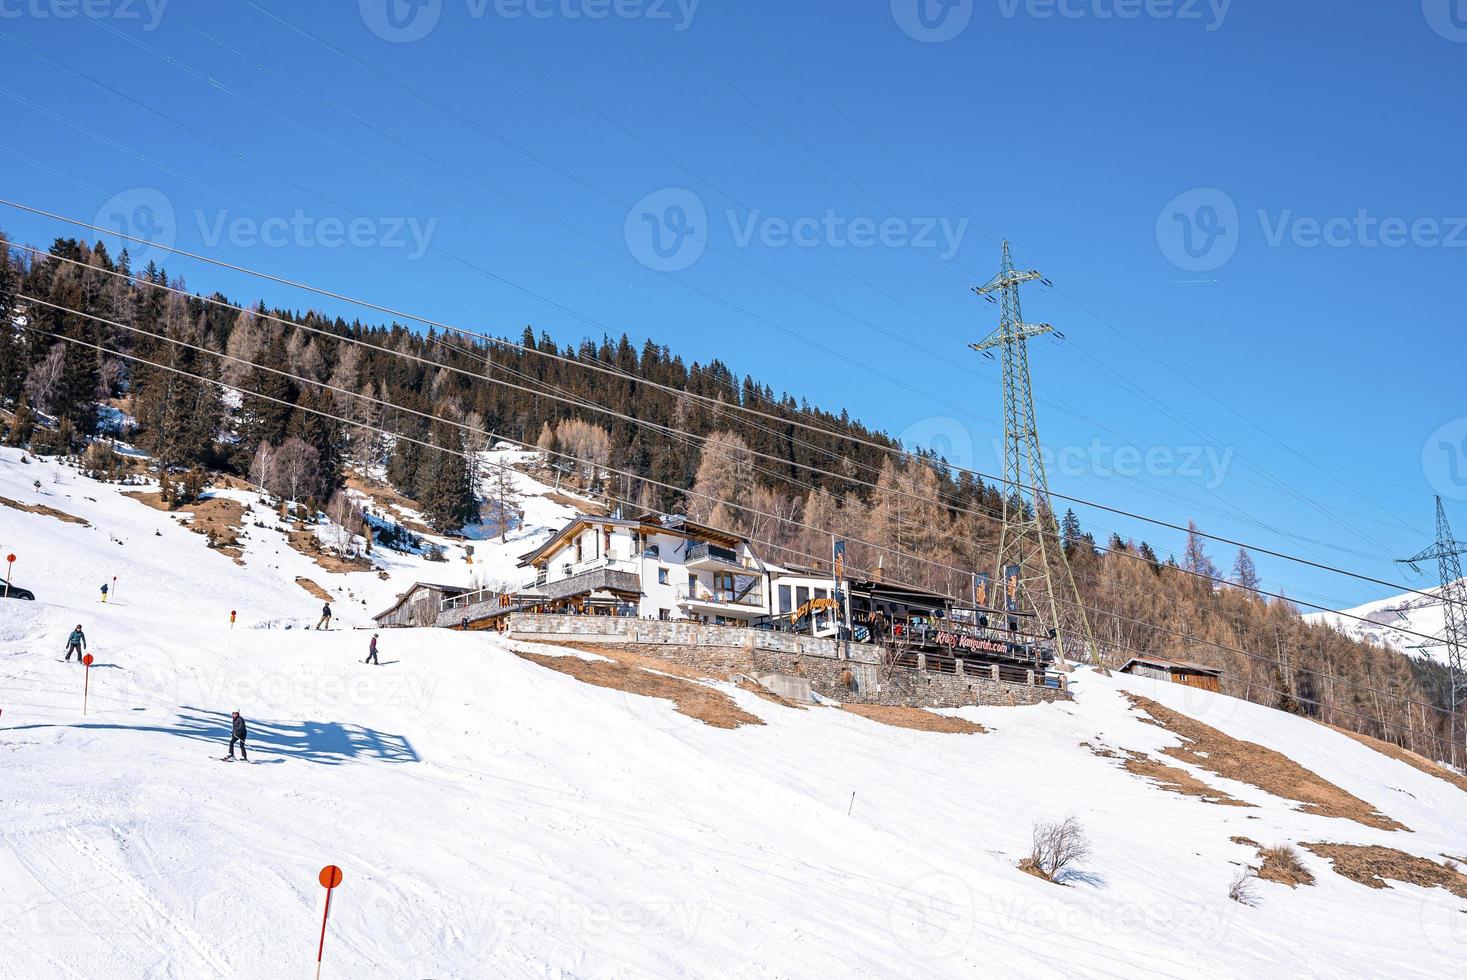 skiërs skiën per resort op berghelling tegen lucht in alps foto